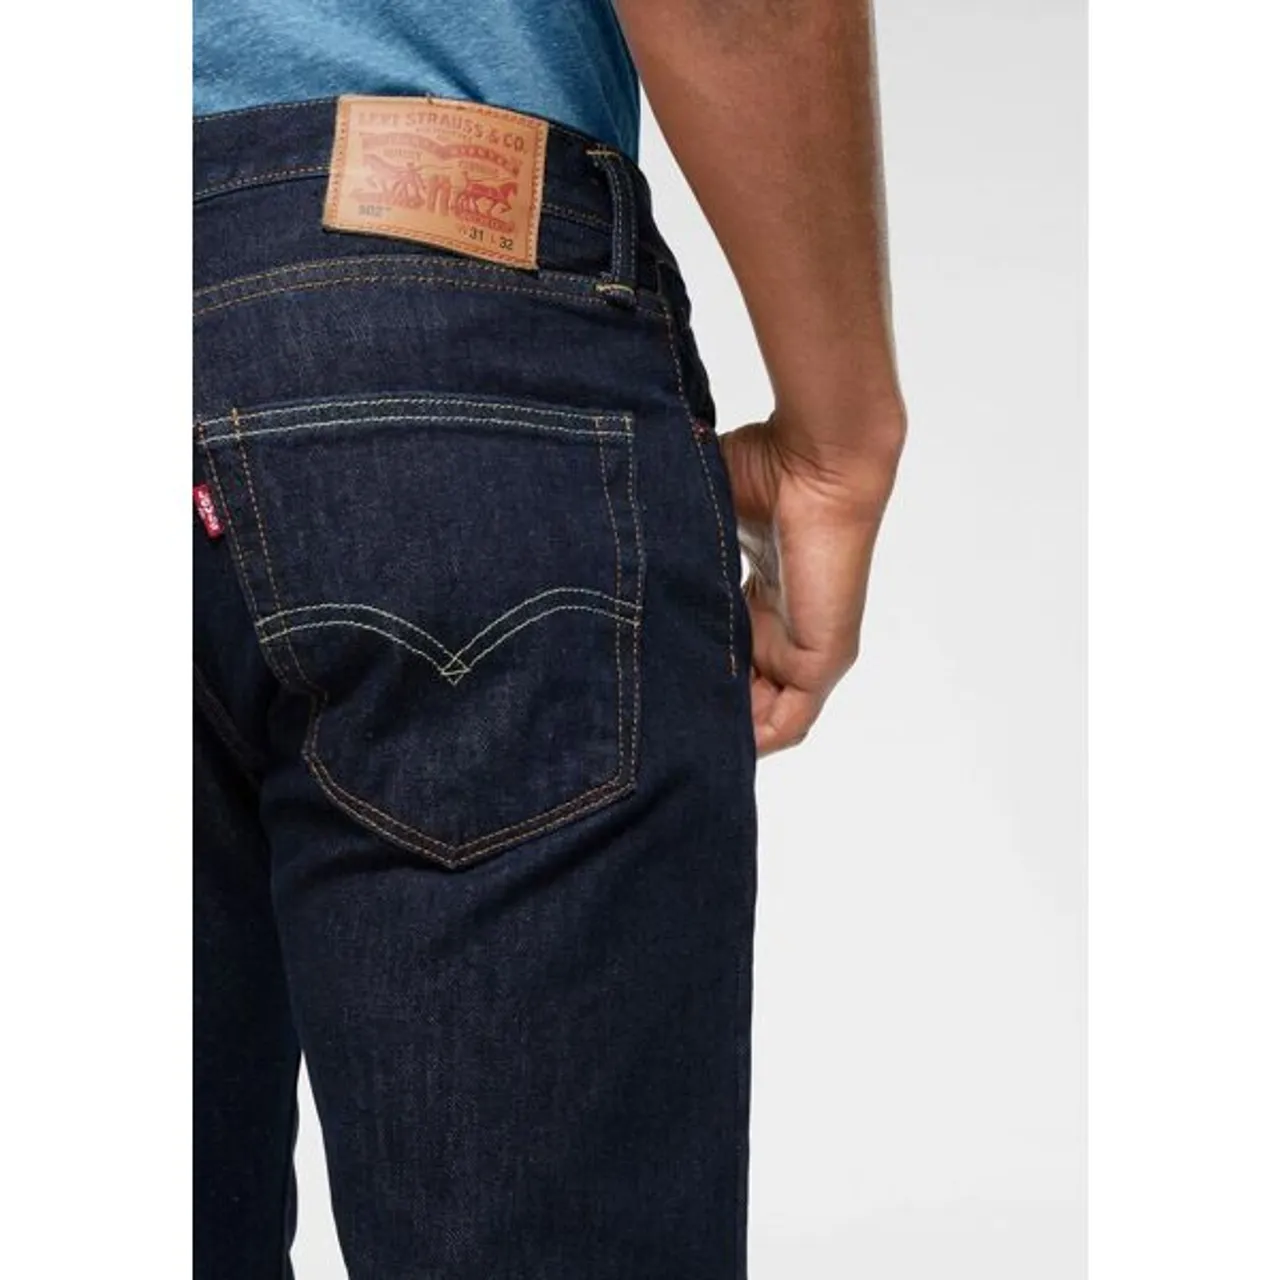 Tapered-fit-Jeans LEVI'S "502 TAPER" Gr. 29, Länge 32, blau (onewash) Herren Jeans Tapered-Jeans